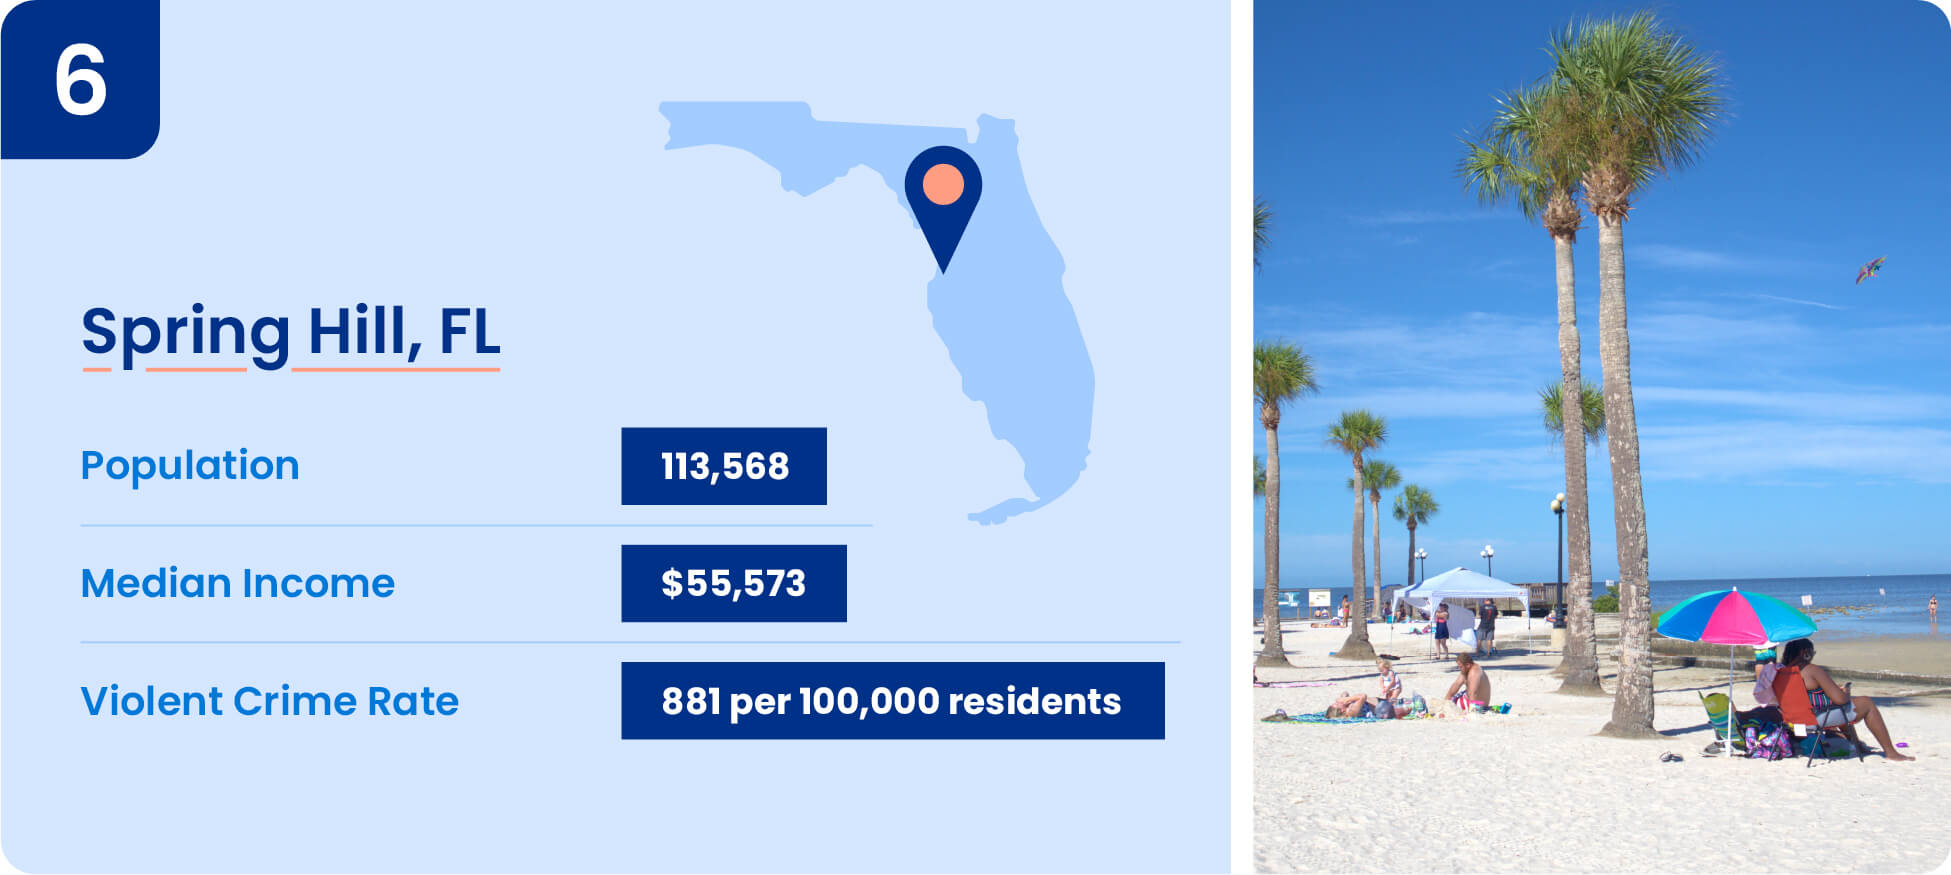 Image shows safety data including median income, population, and violent crime rate for Spring Hill, Florida.